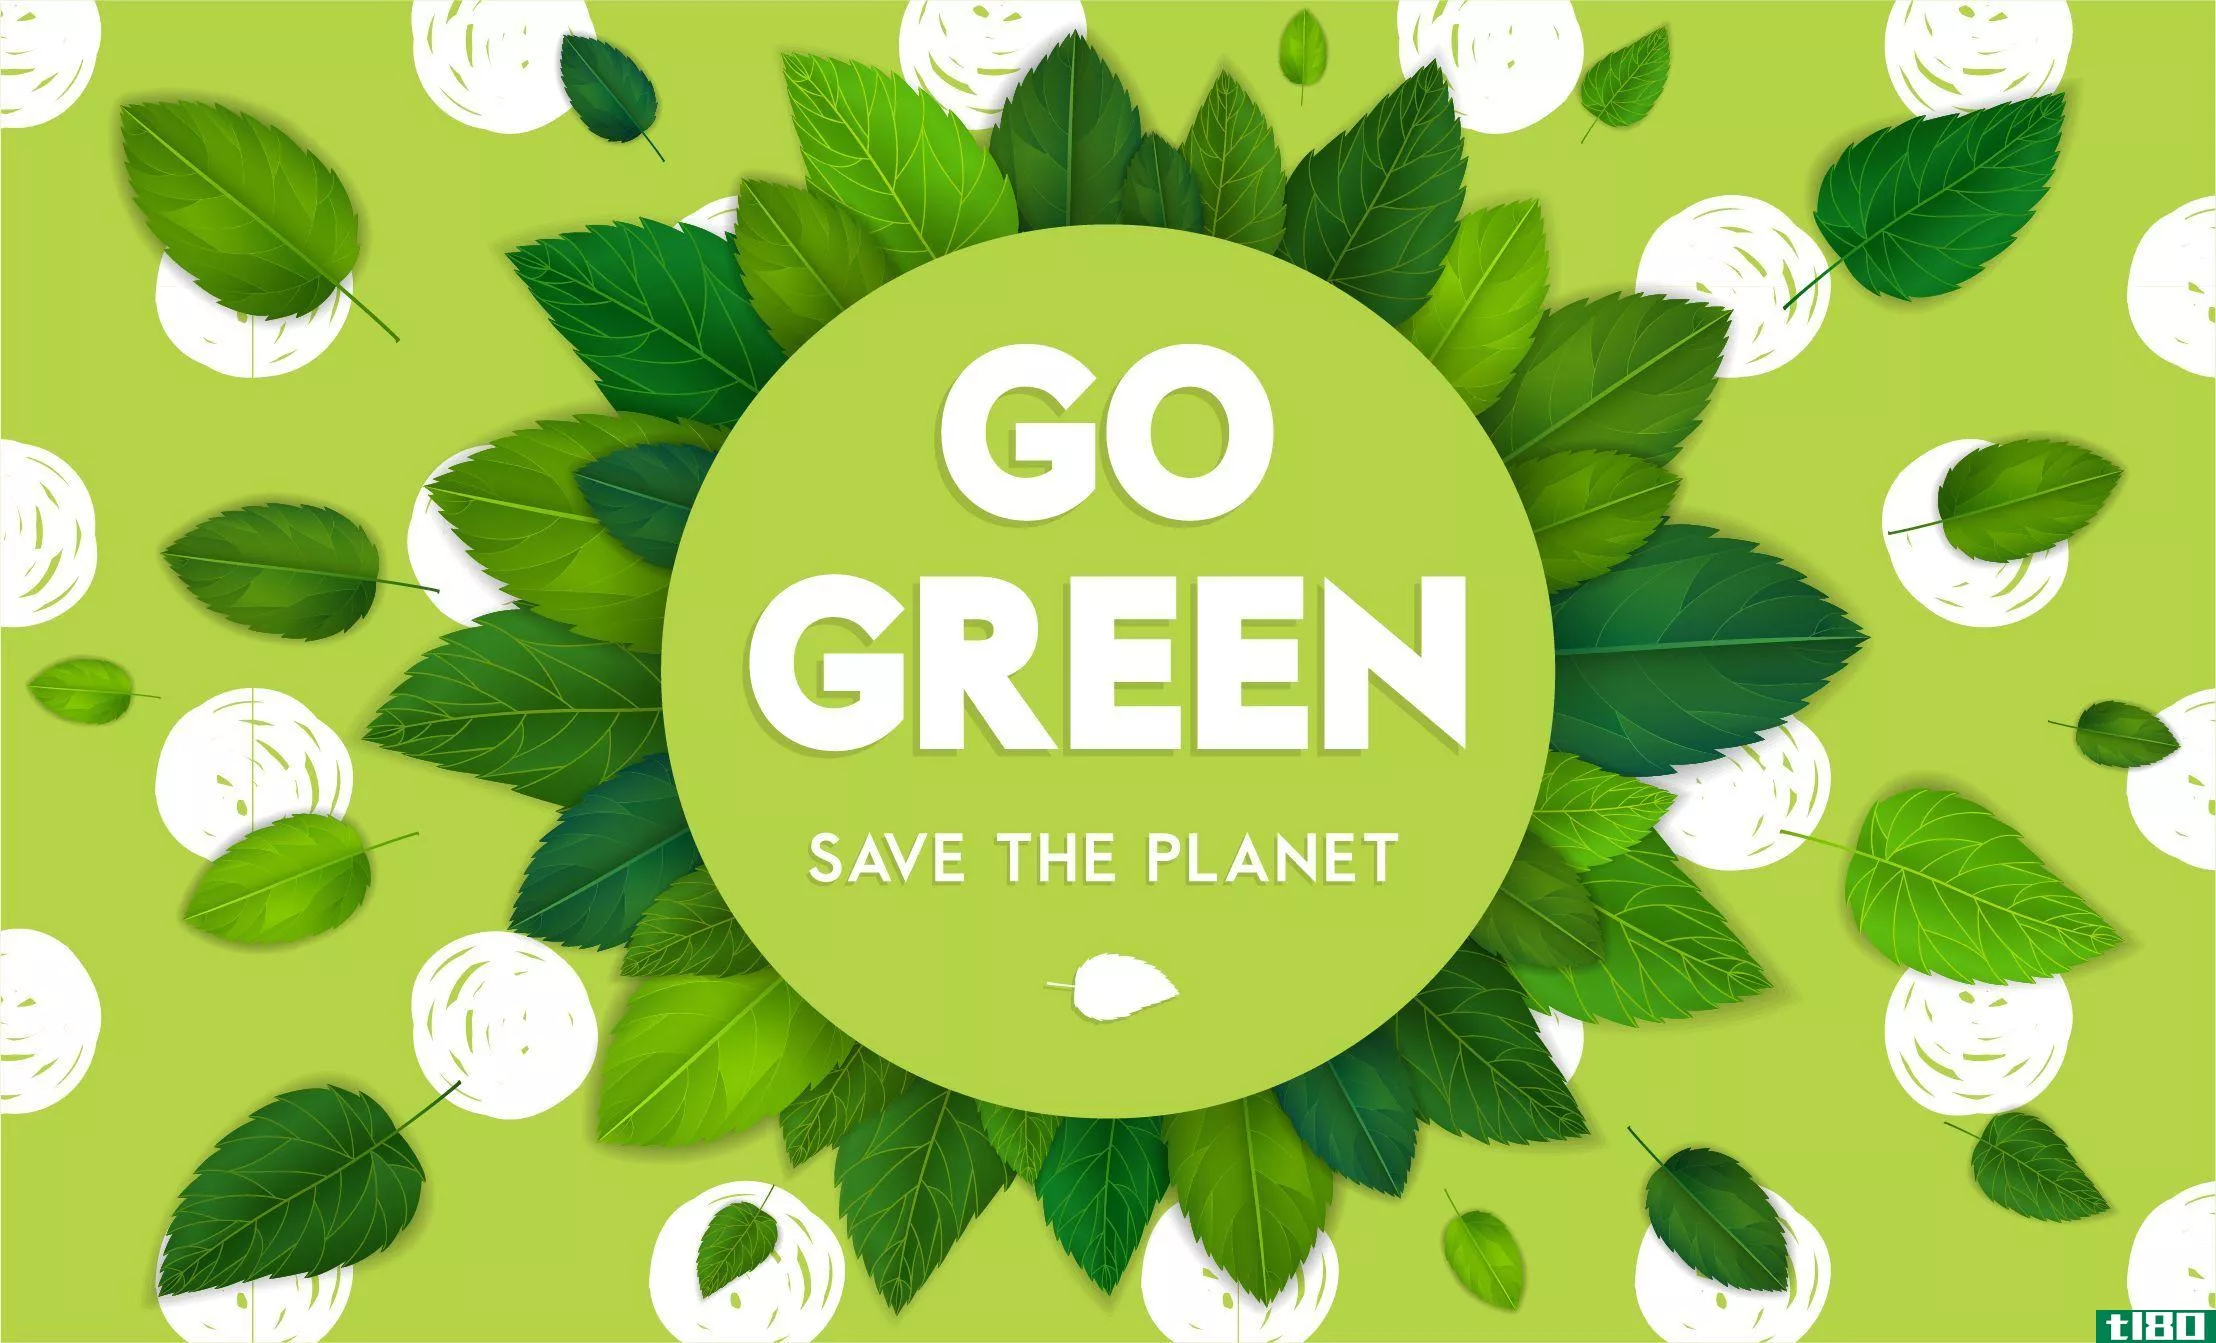 Go Green slogan